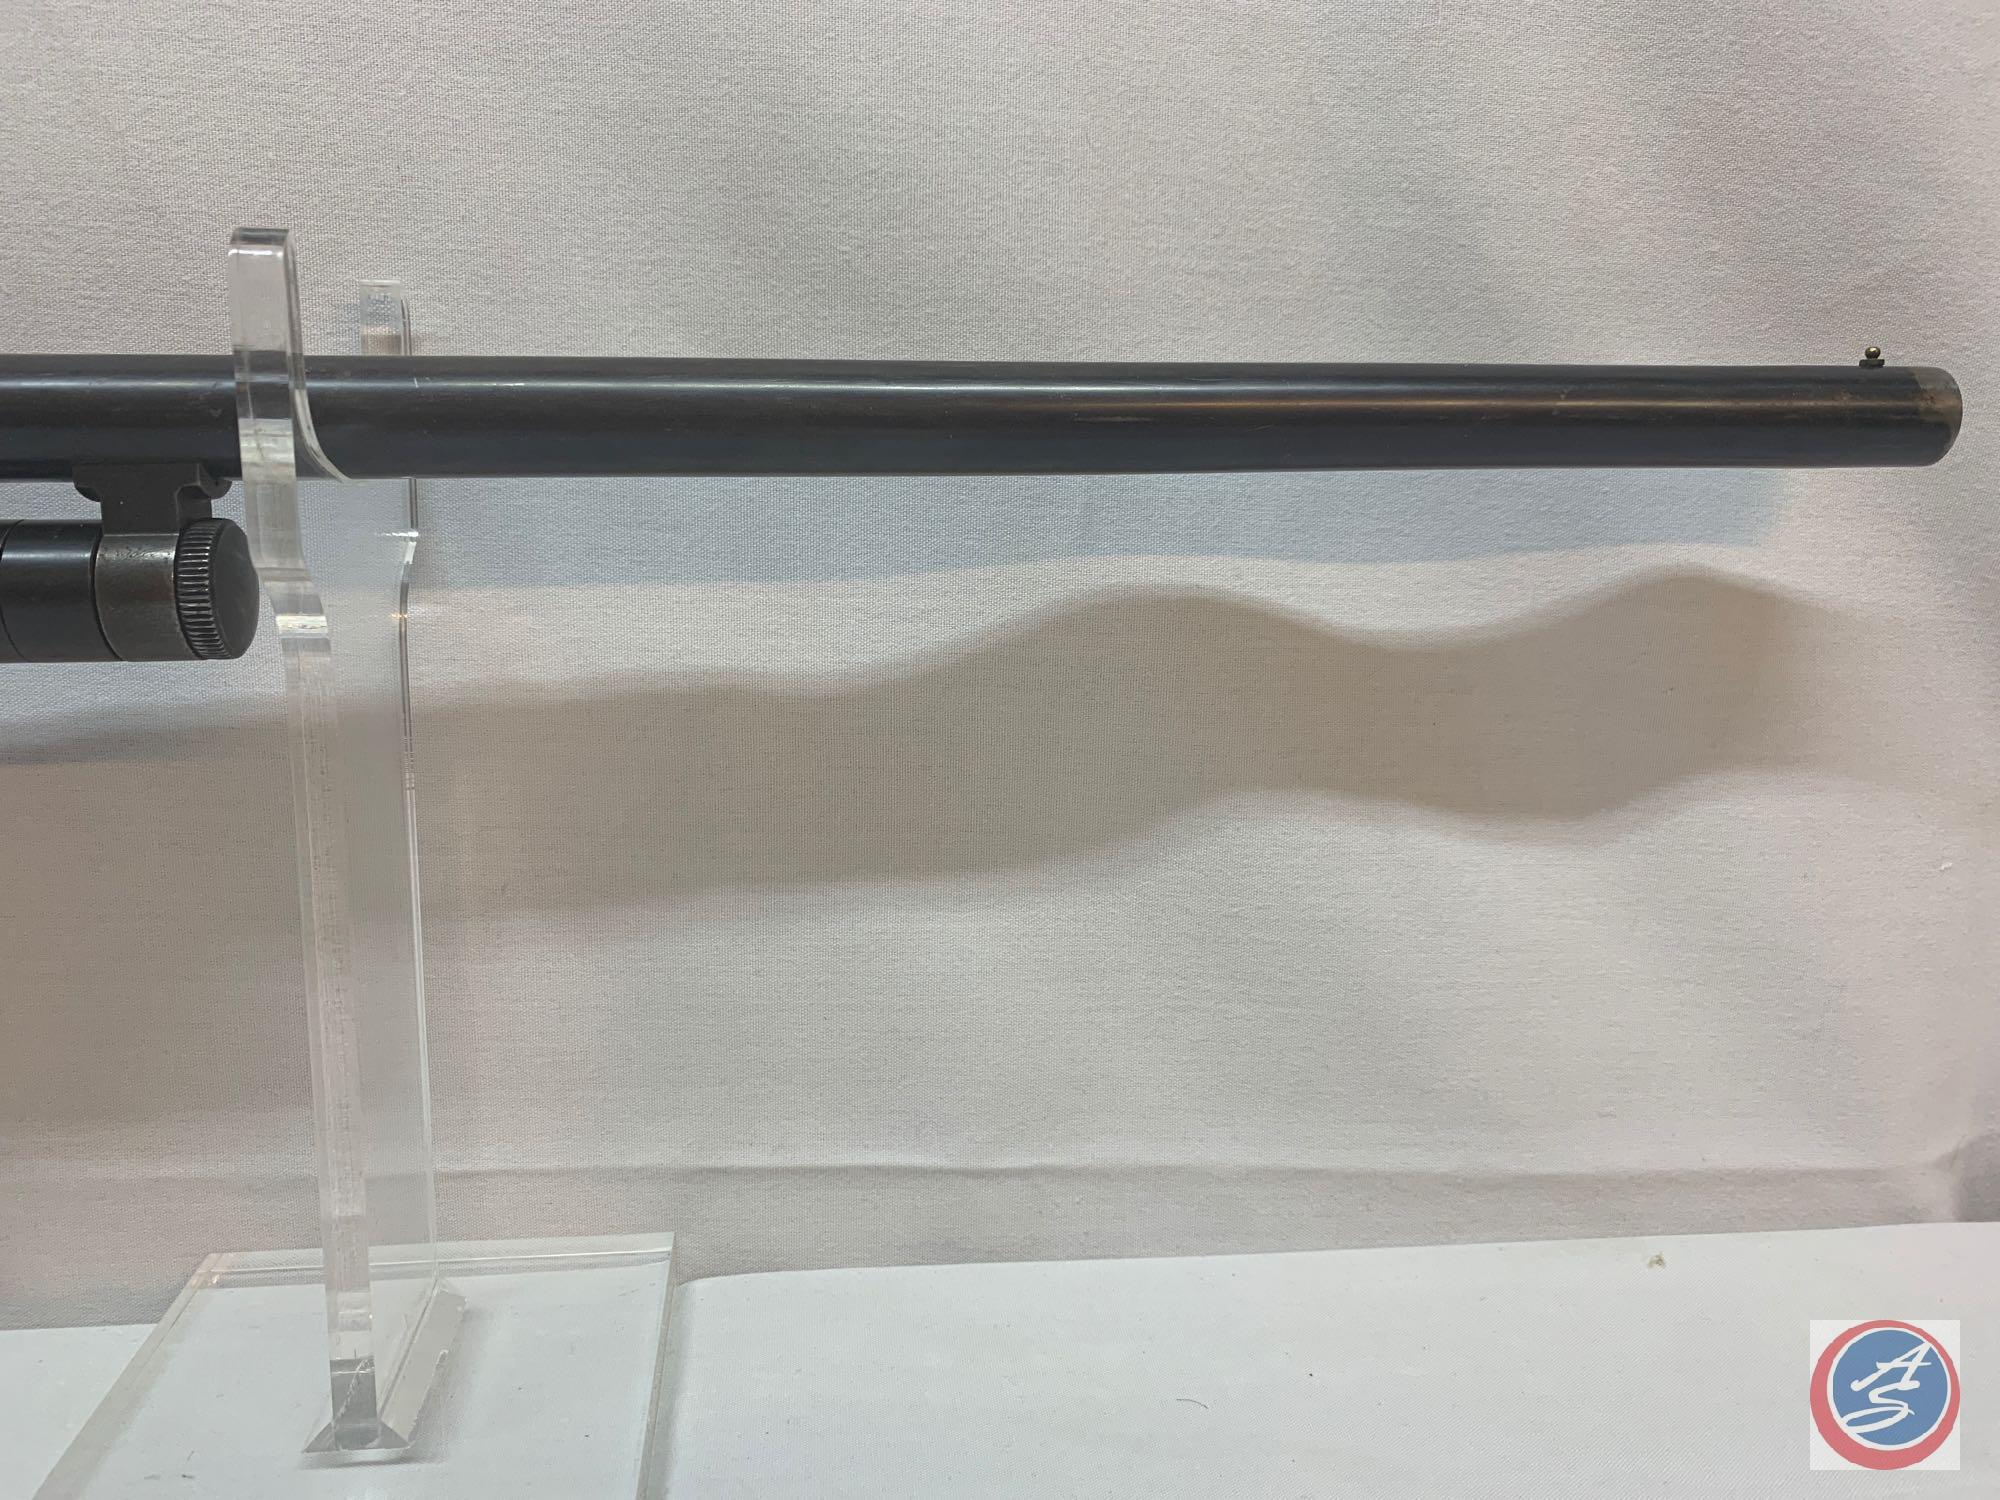 Revelation Model 310B 16 GA Shotgun PUMP Auction Shotgun with 28 inch full choke barrel sold by